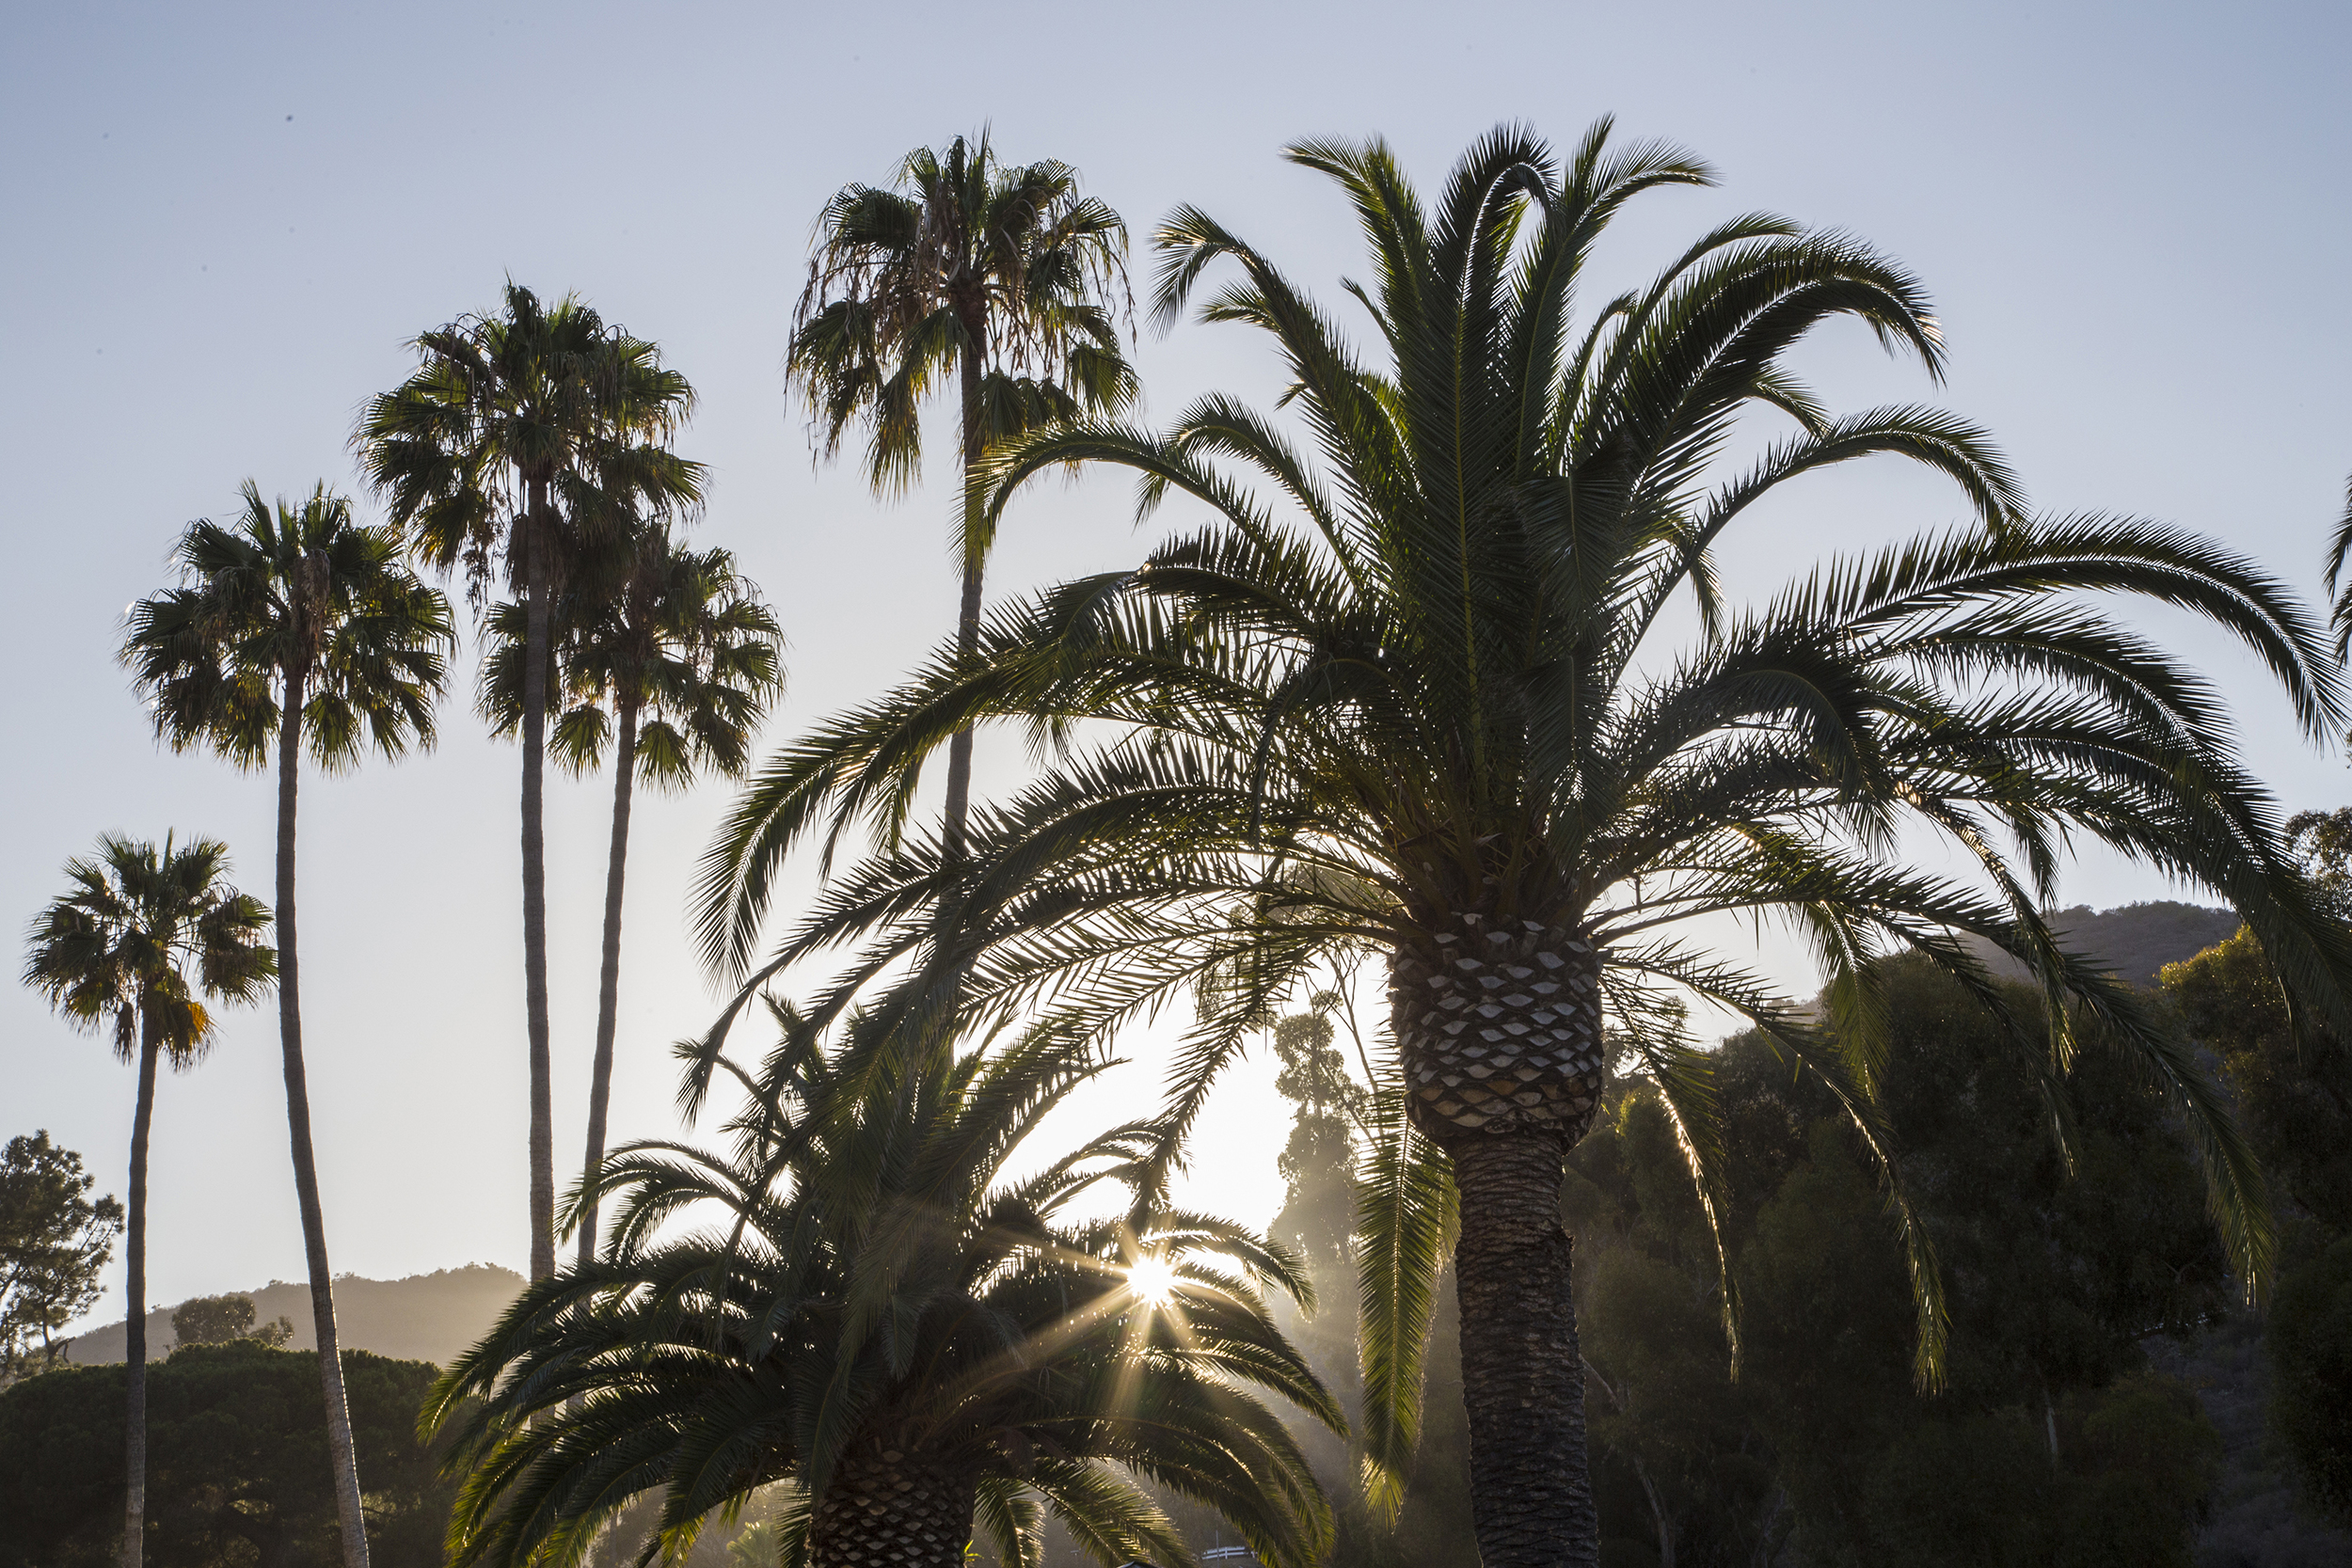  Palm trees, Catalina Island, California  